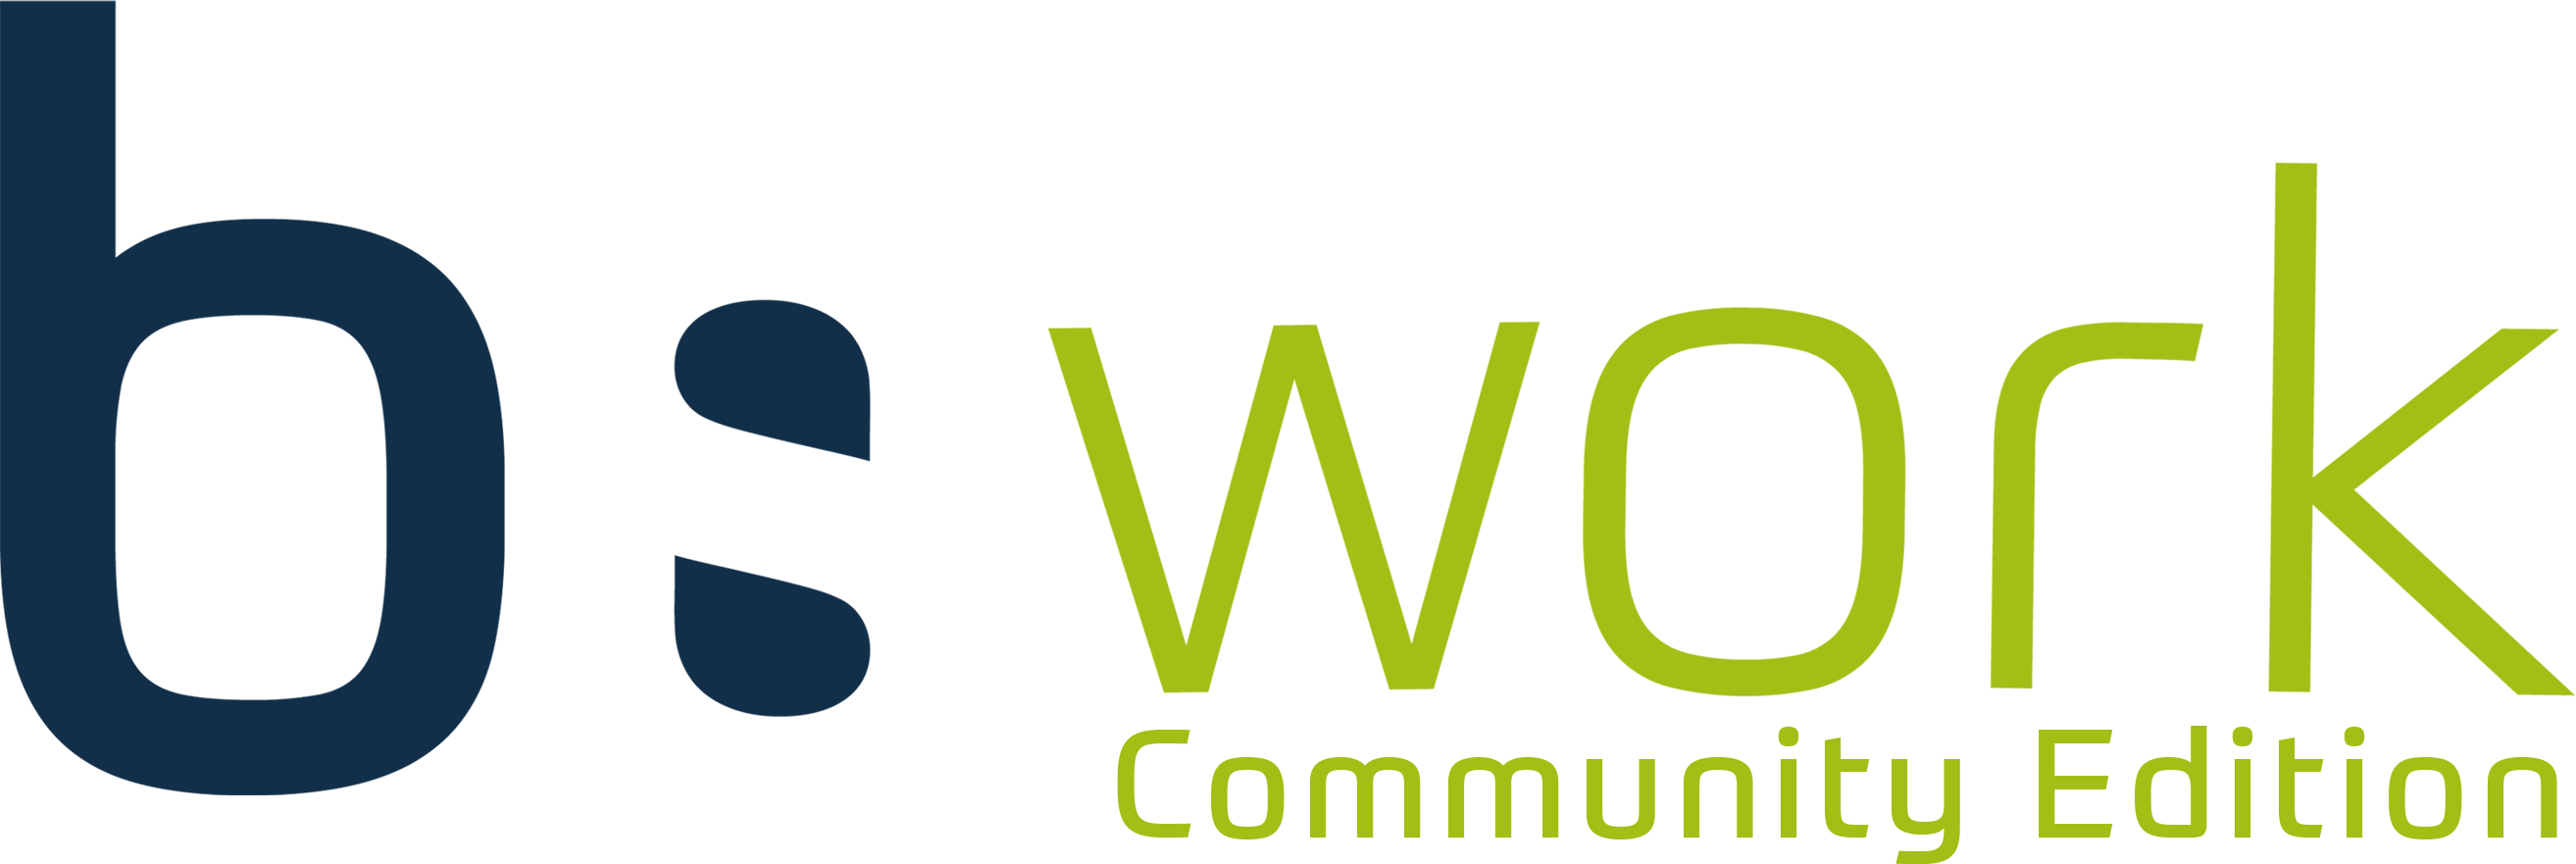 Logo blue:solution - work community edition